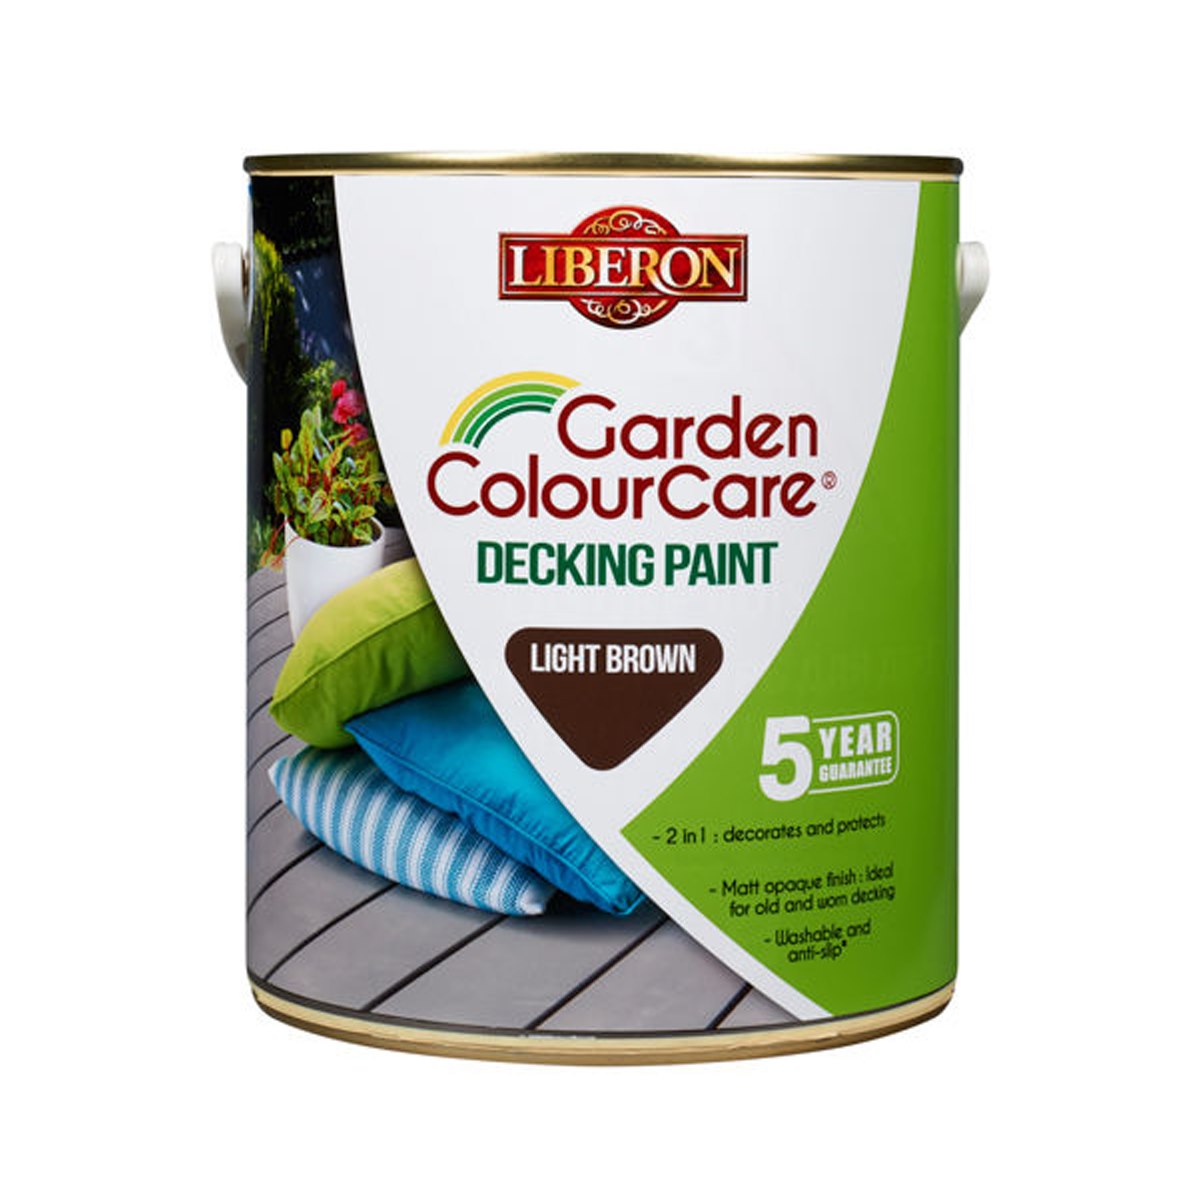 Liberon Garden ColourCare Decking Paint Light Brown 2.5 Litre